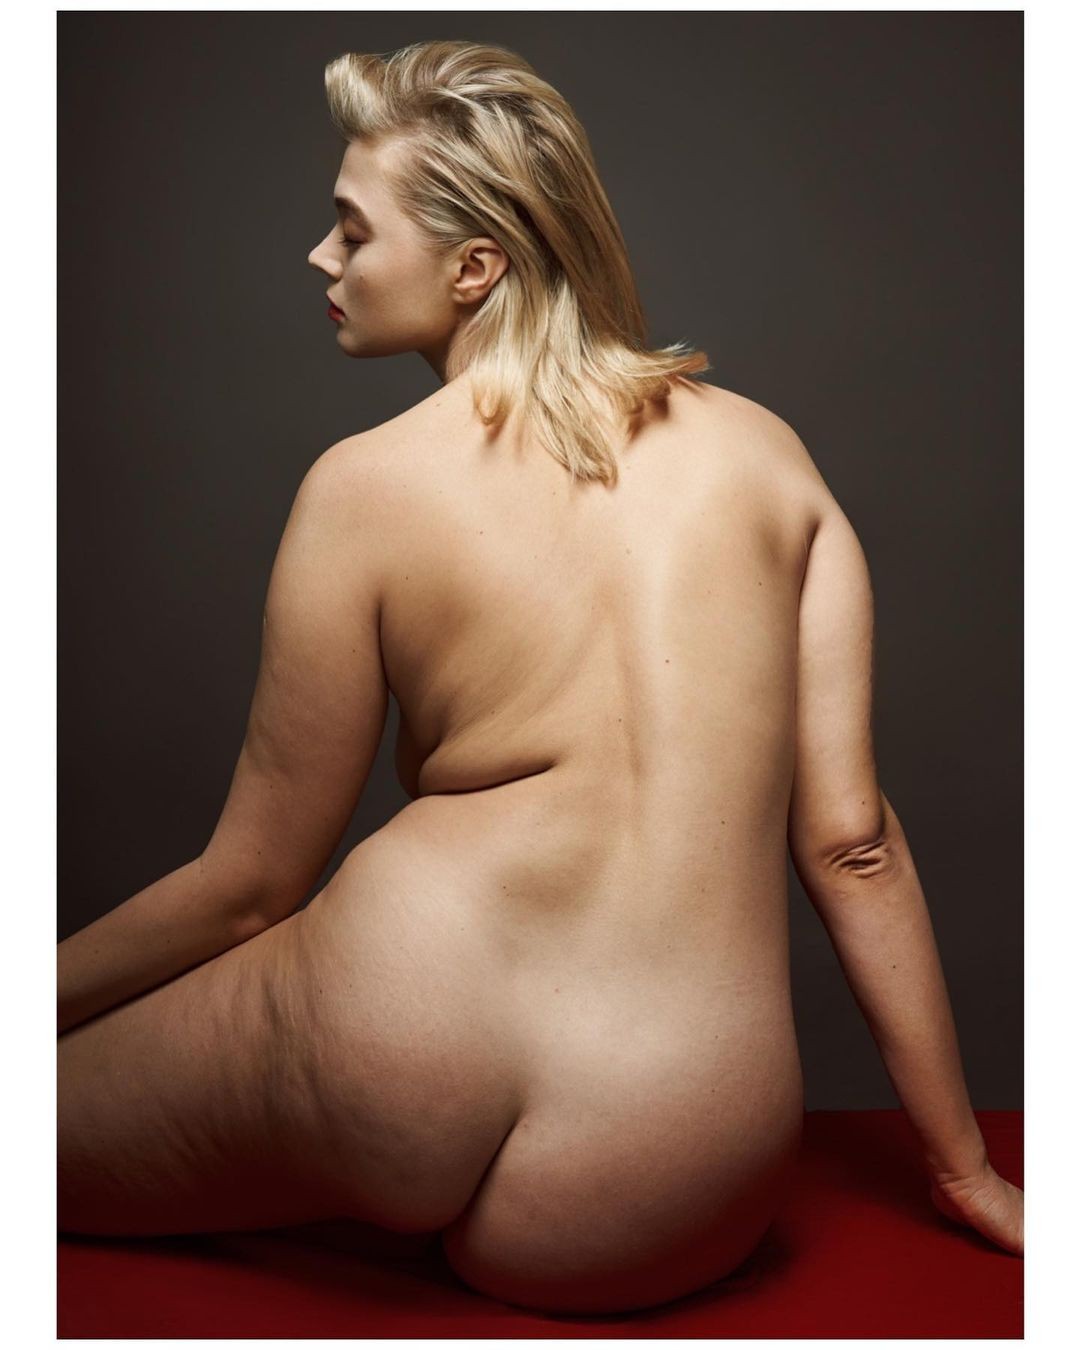 Khrystyana Kazakova Nude TheFappeningPro 7 - Khrystyana Kazakova Nude And Sexy (159 Photos And Videos)